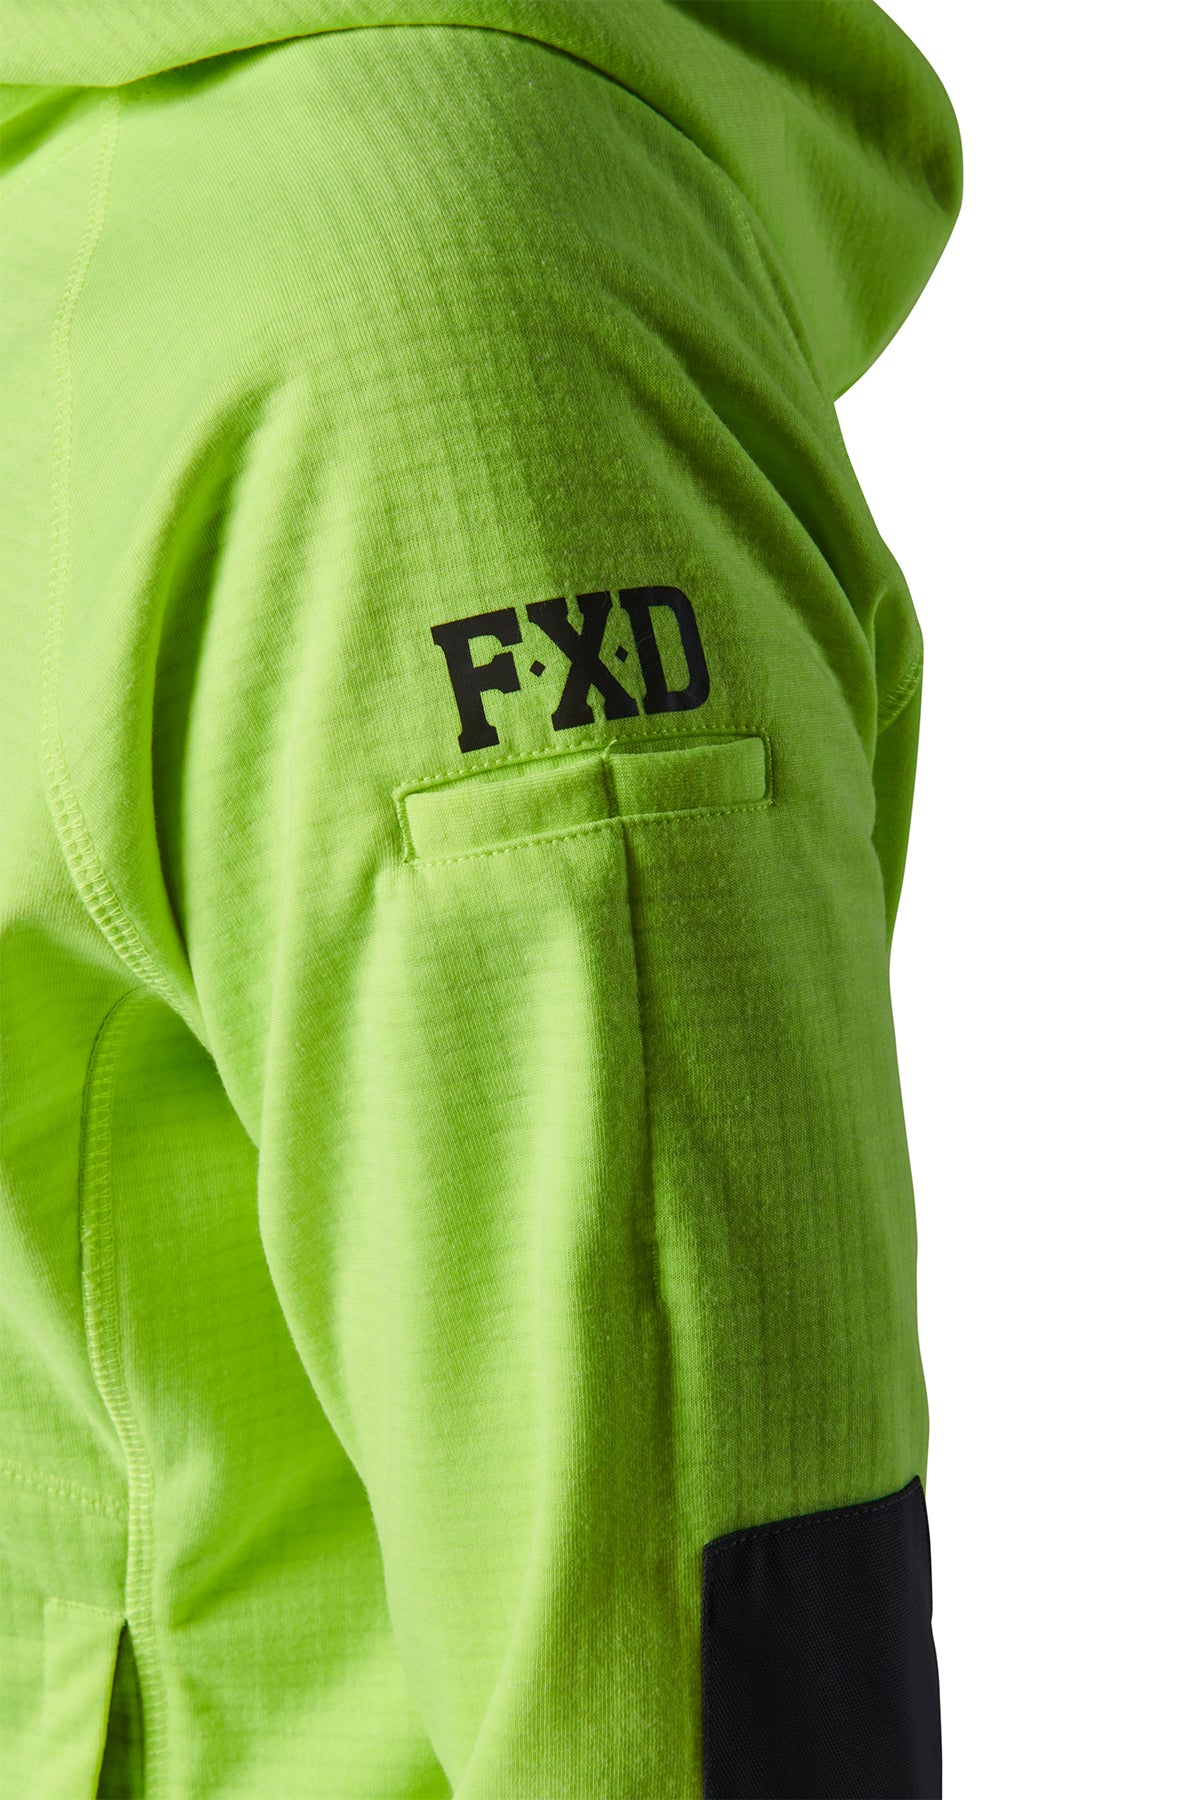 FXD WF-3W Women's Hi Vis Zip Hooded Jacket